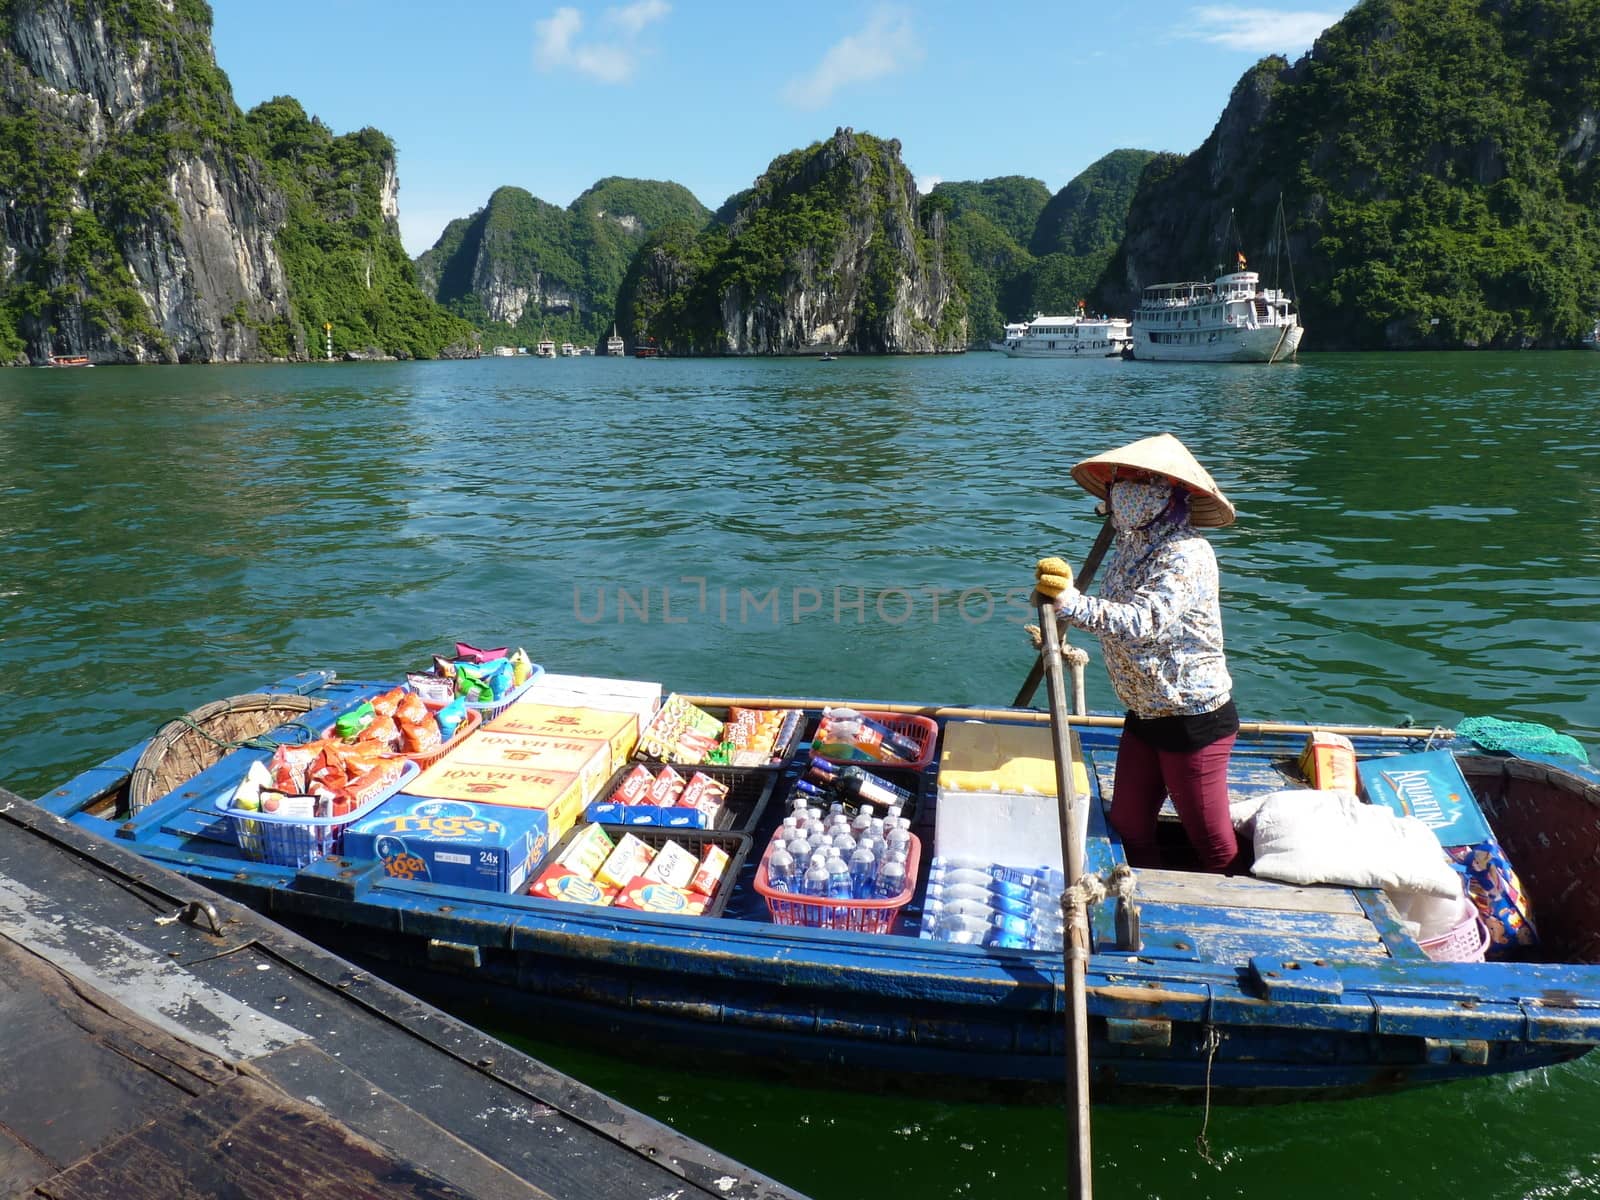 Seller on her boat in Halong Bay, Vietnam